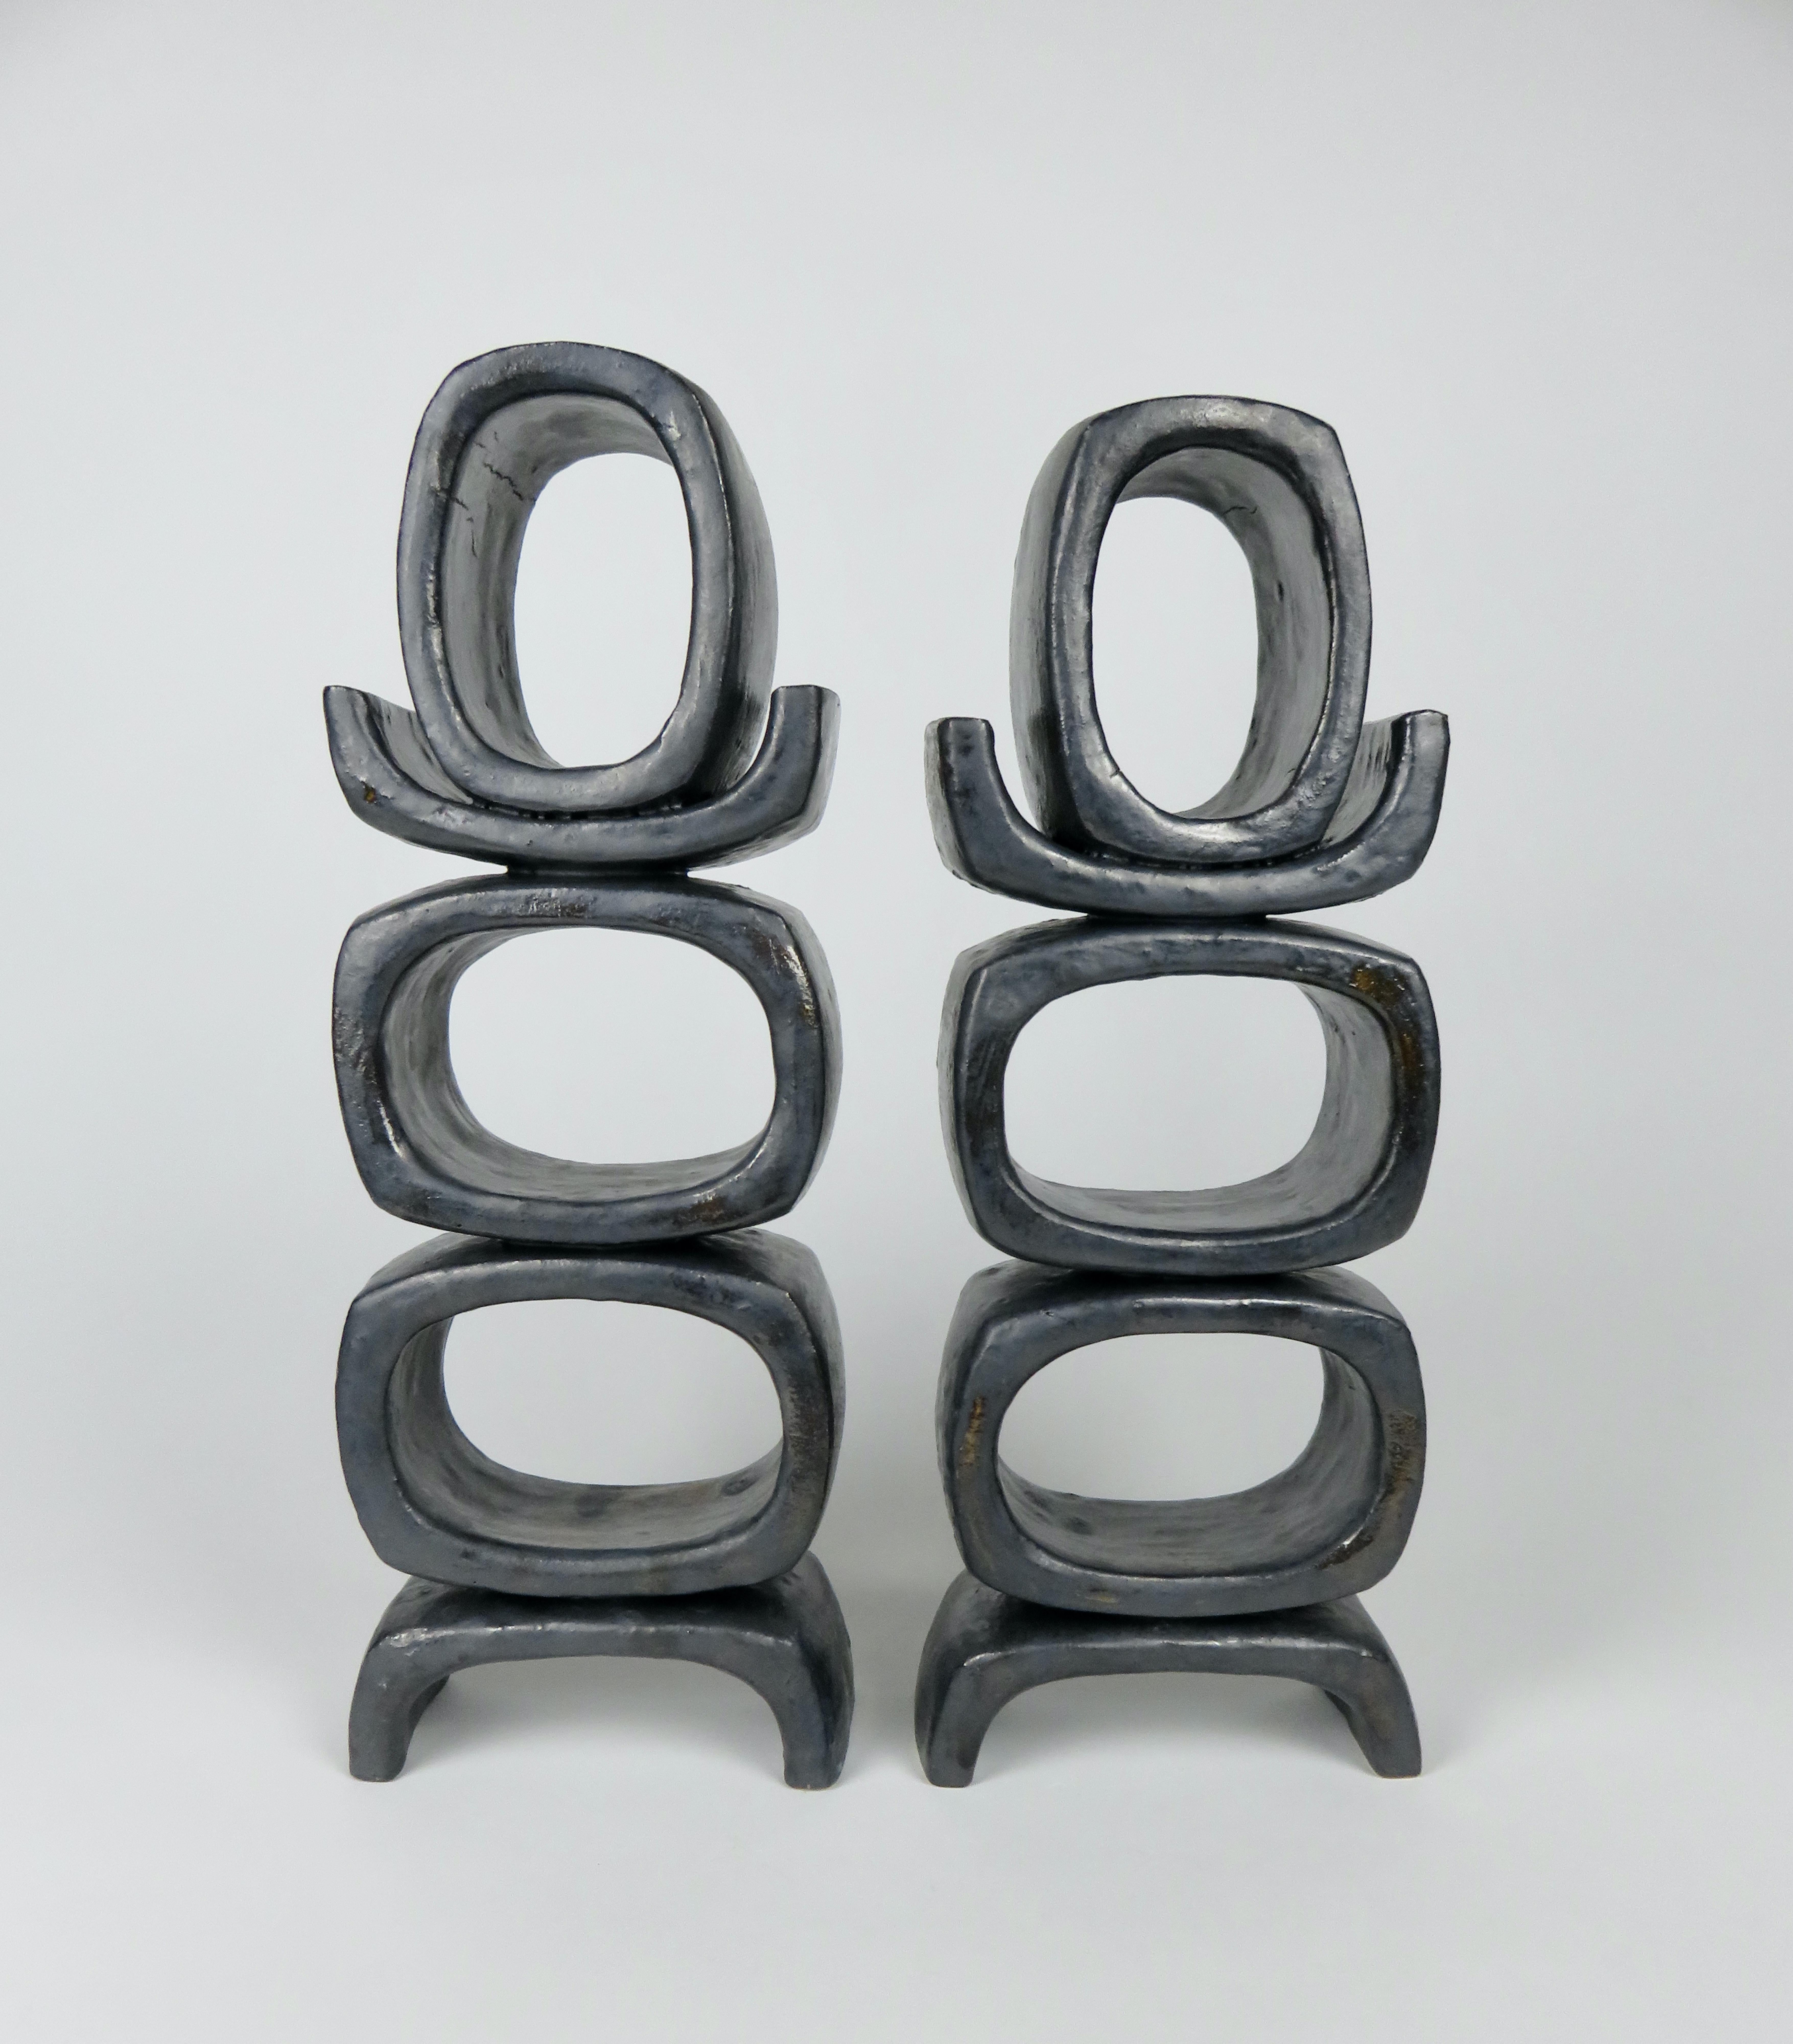 3 Rectangular Ovals, Short Angled Legs, Metallic Black-Glazed Clay Sculpture #1 7